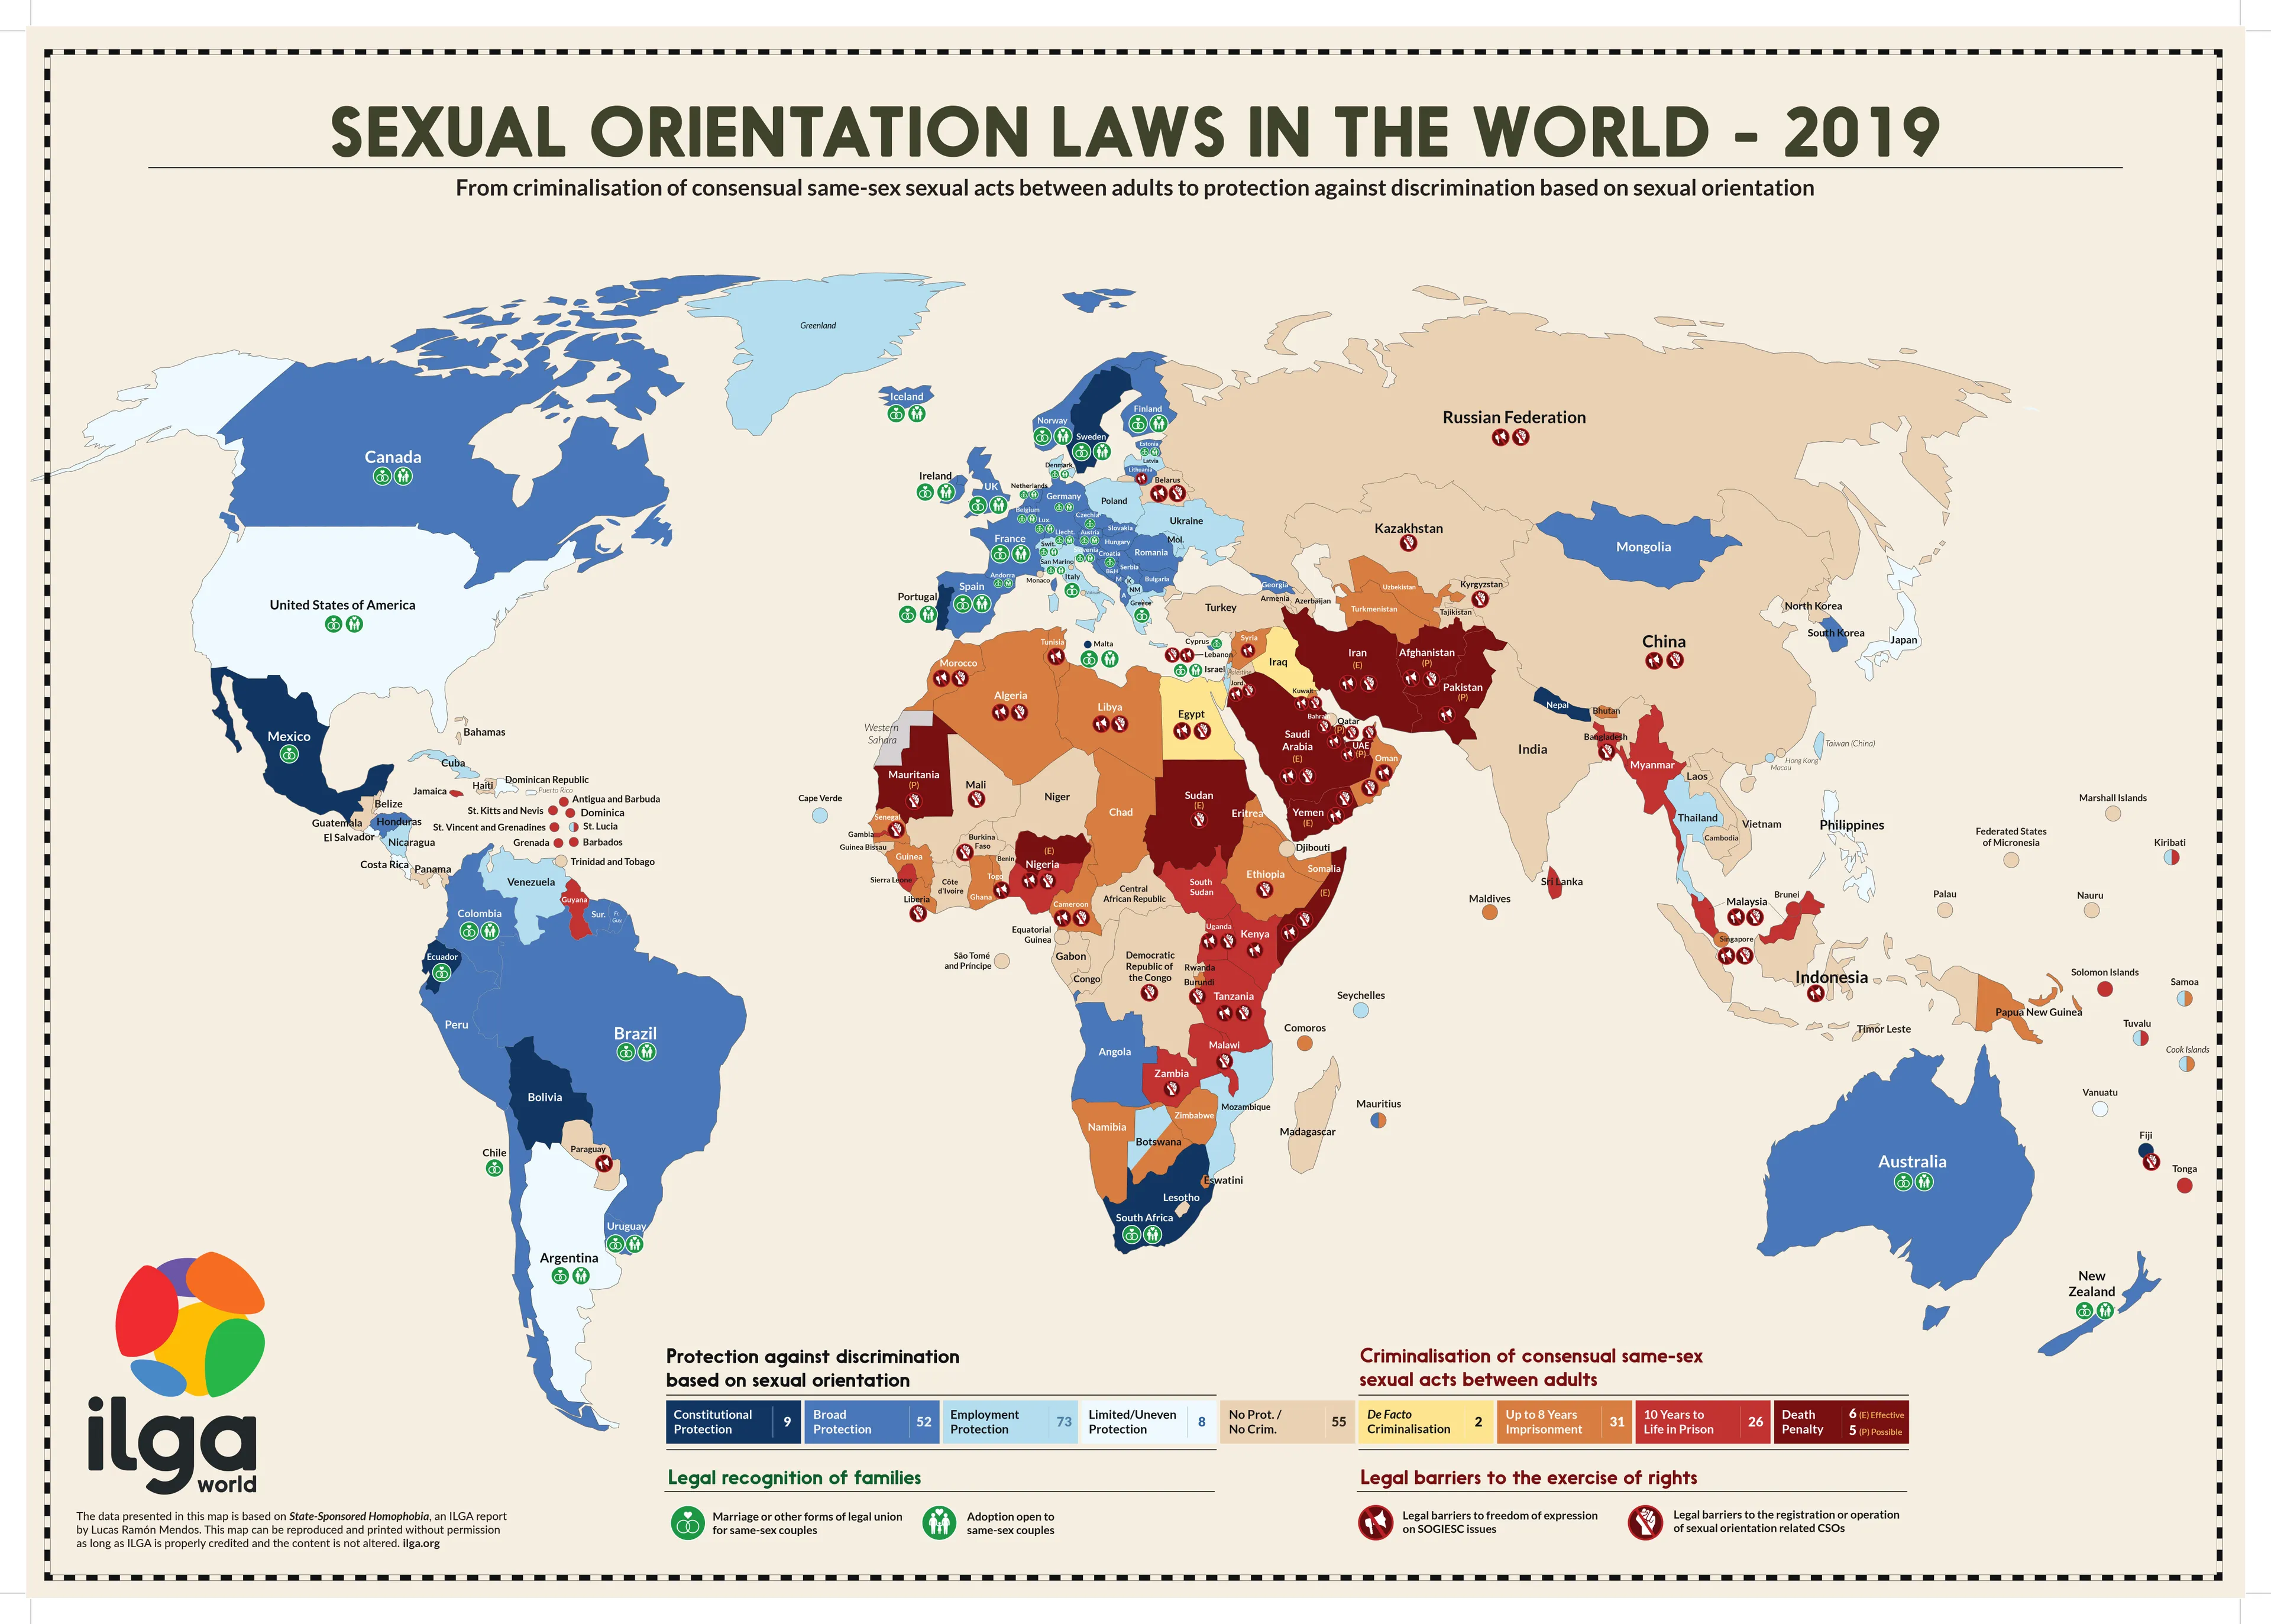 ilga sexual orientation laws map 2019